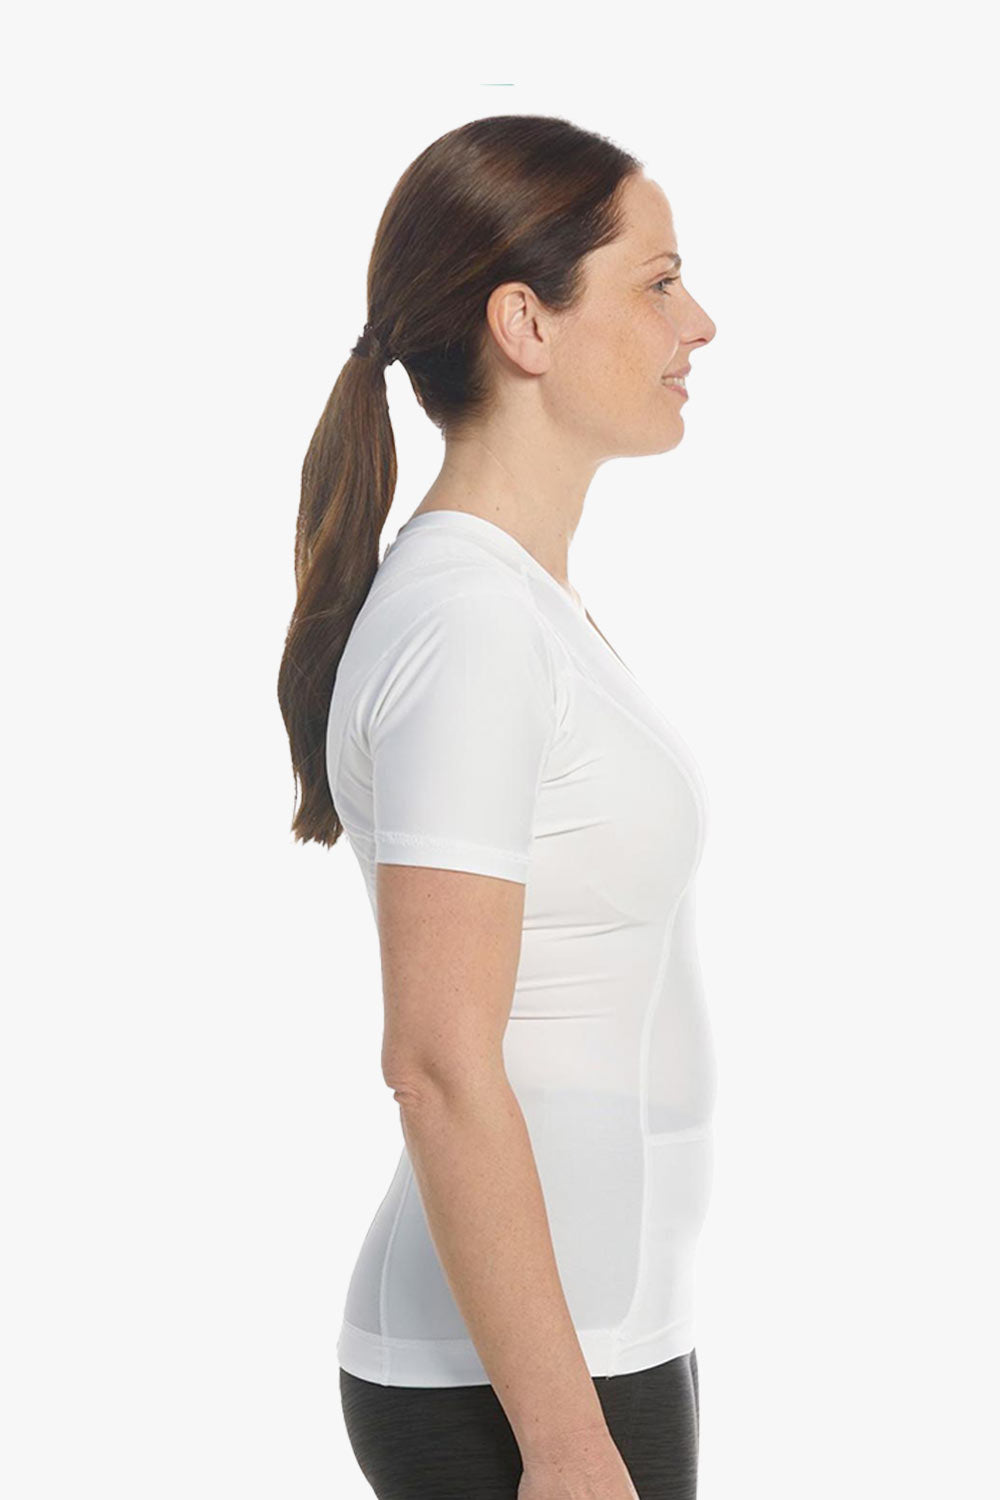 Women's Posture Shirt™ - Hvit